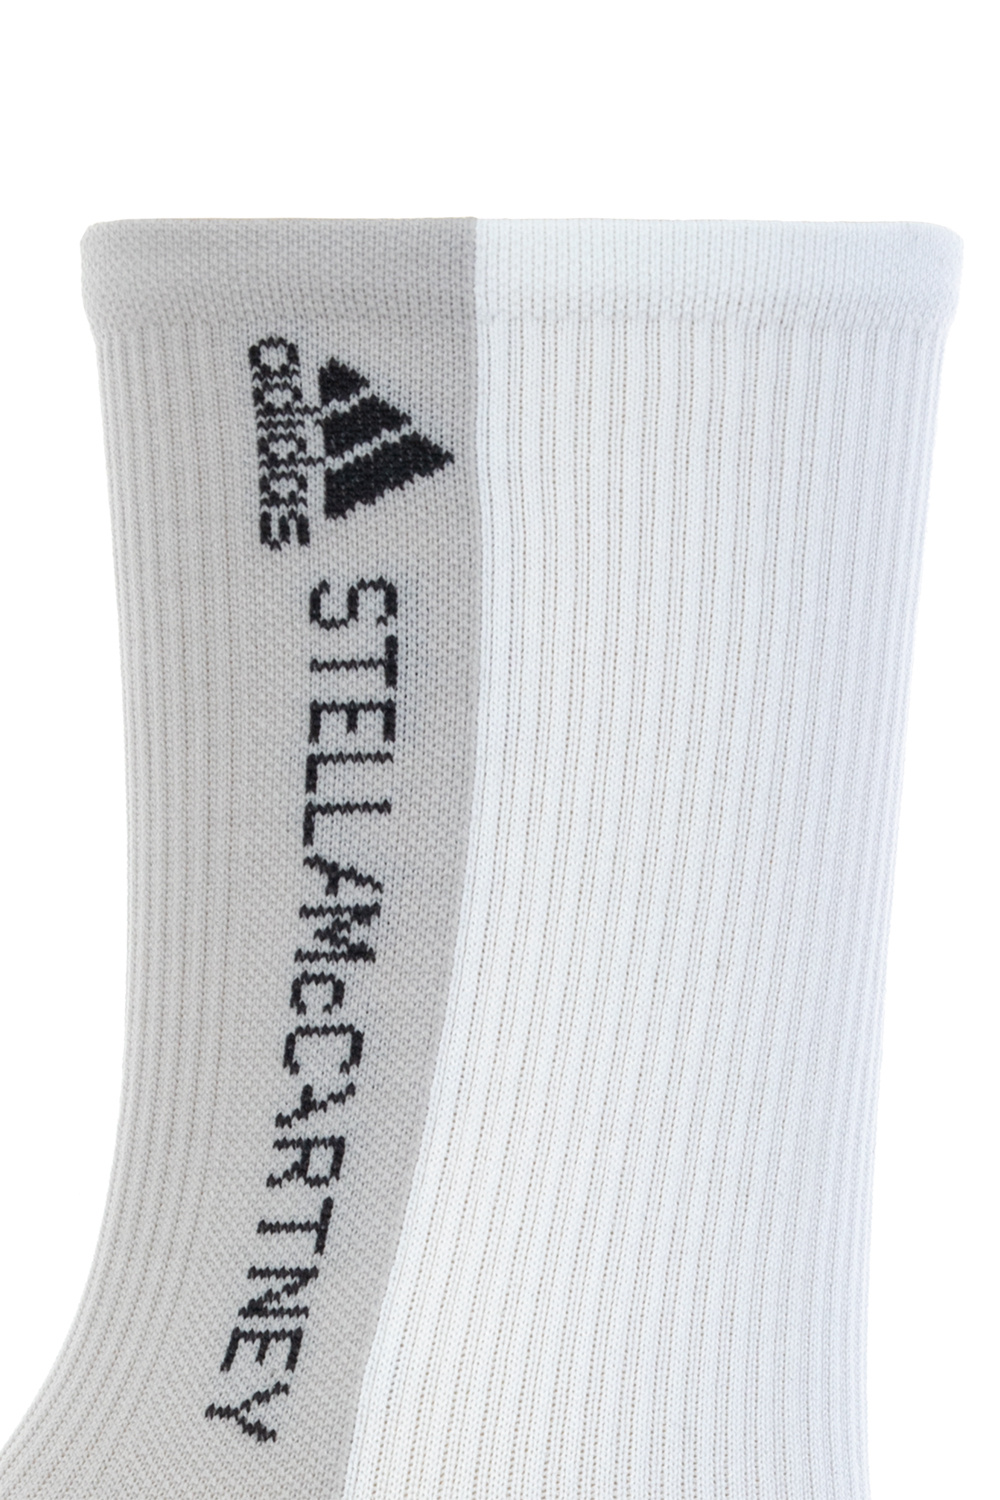 IetpShops, ADIDAS by Stella McCartney Socks with logo, Adidas Superstar  Philly Blunt